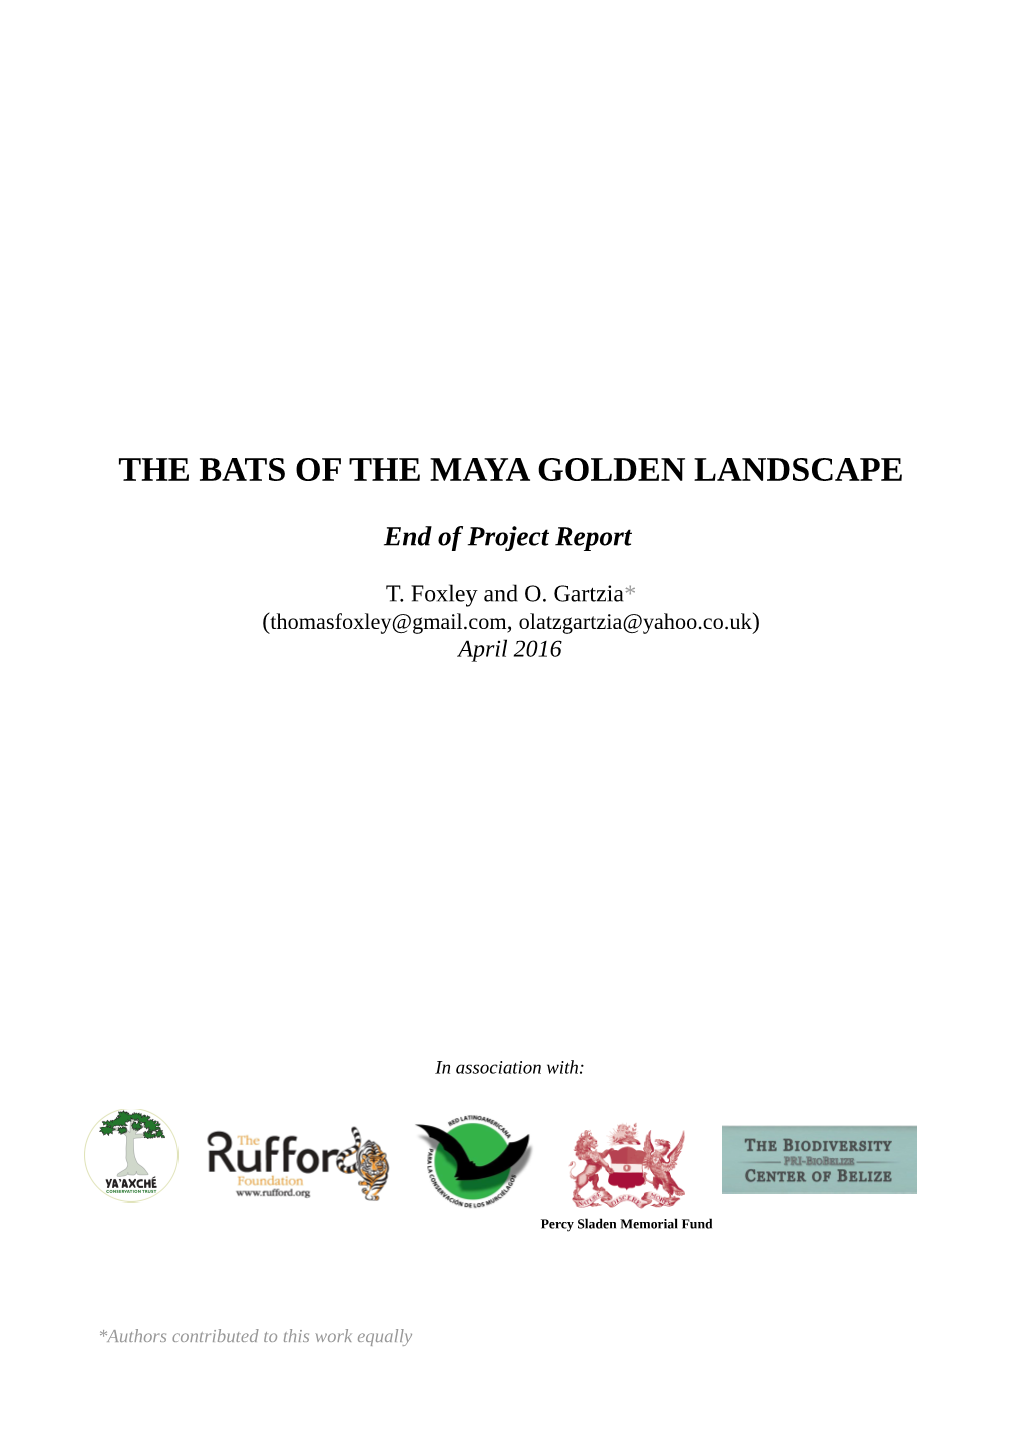 The Bats of the Maya Golden Landscape